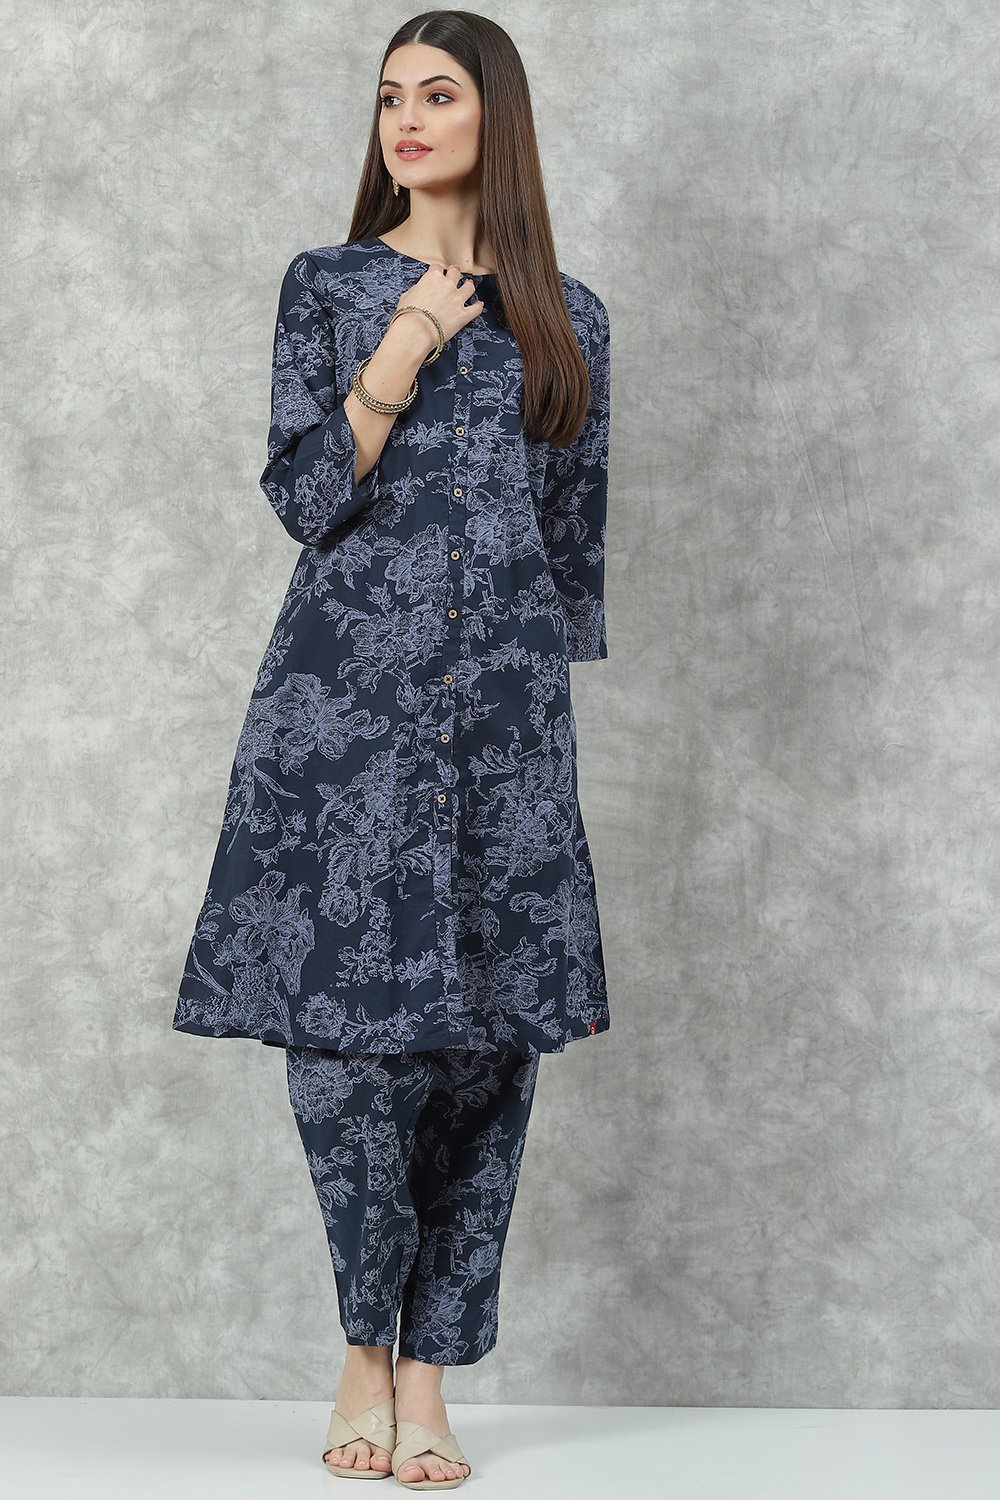 Buy online Indigo Rayon Straight Kurta Palazzo Suit Set for womens ...